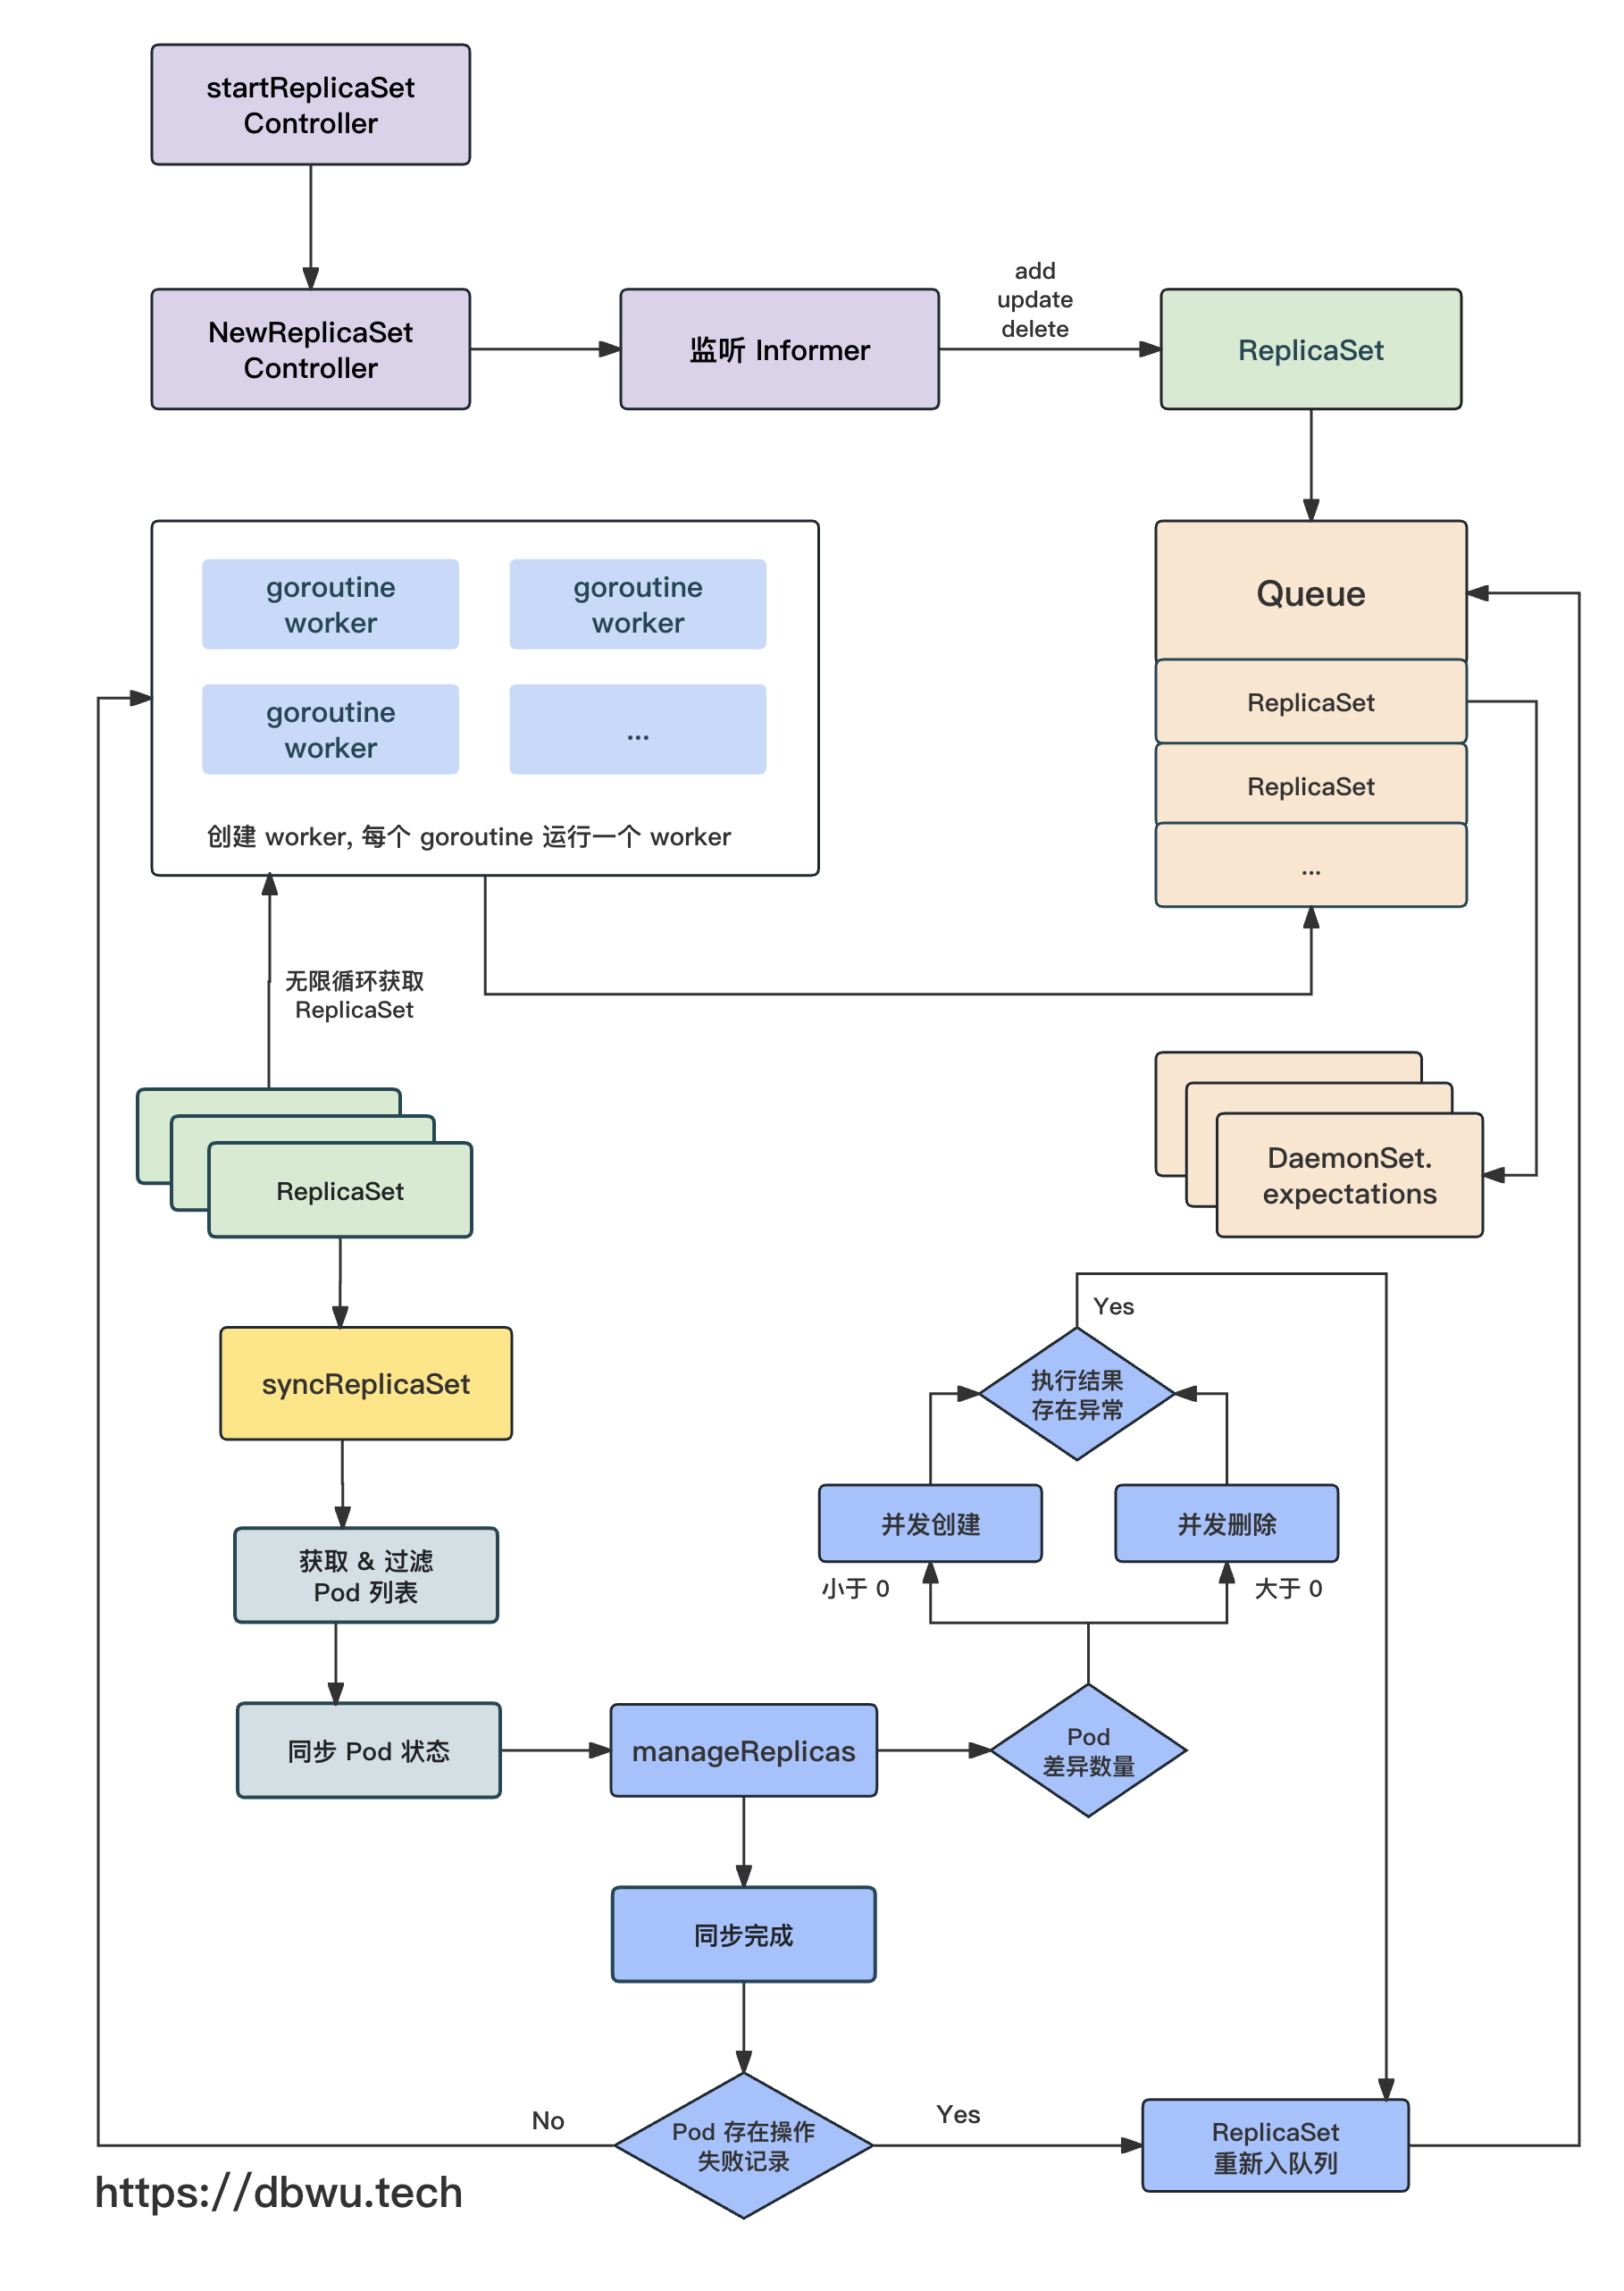 replicaset 控制器执行流程图